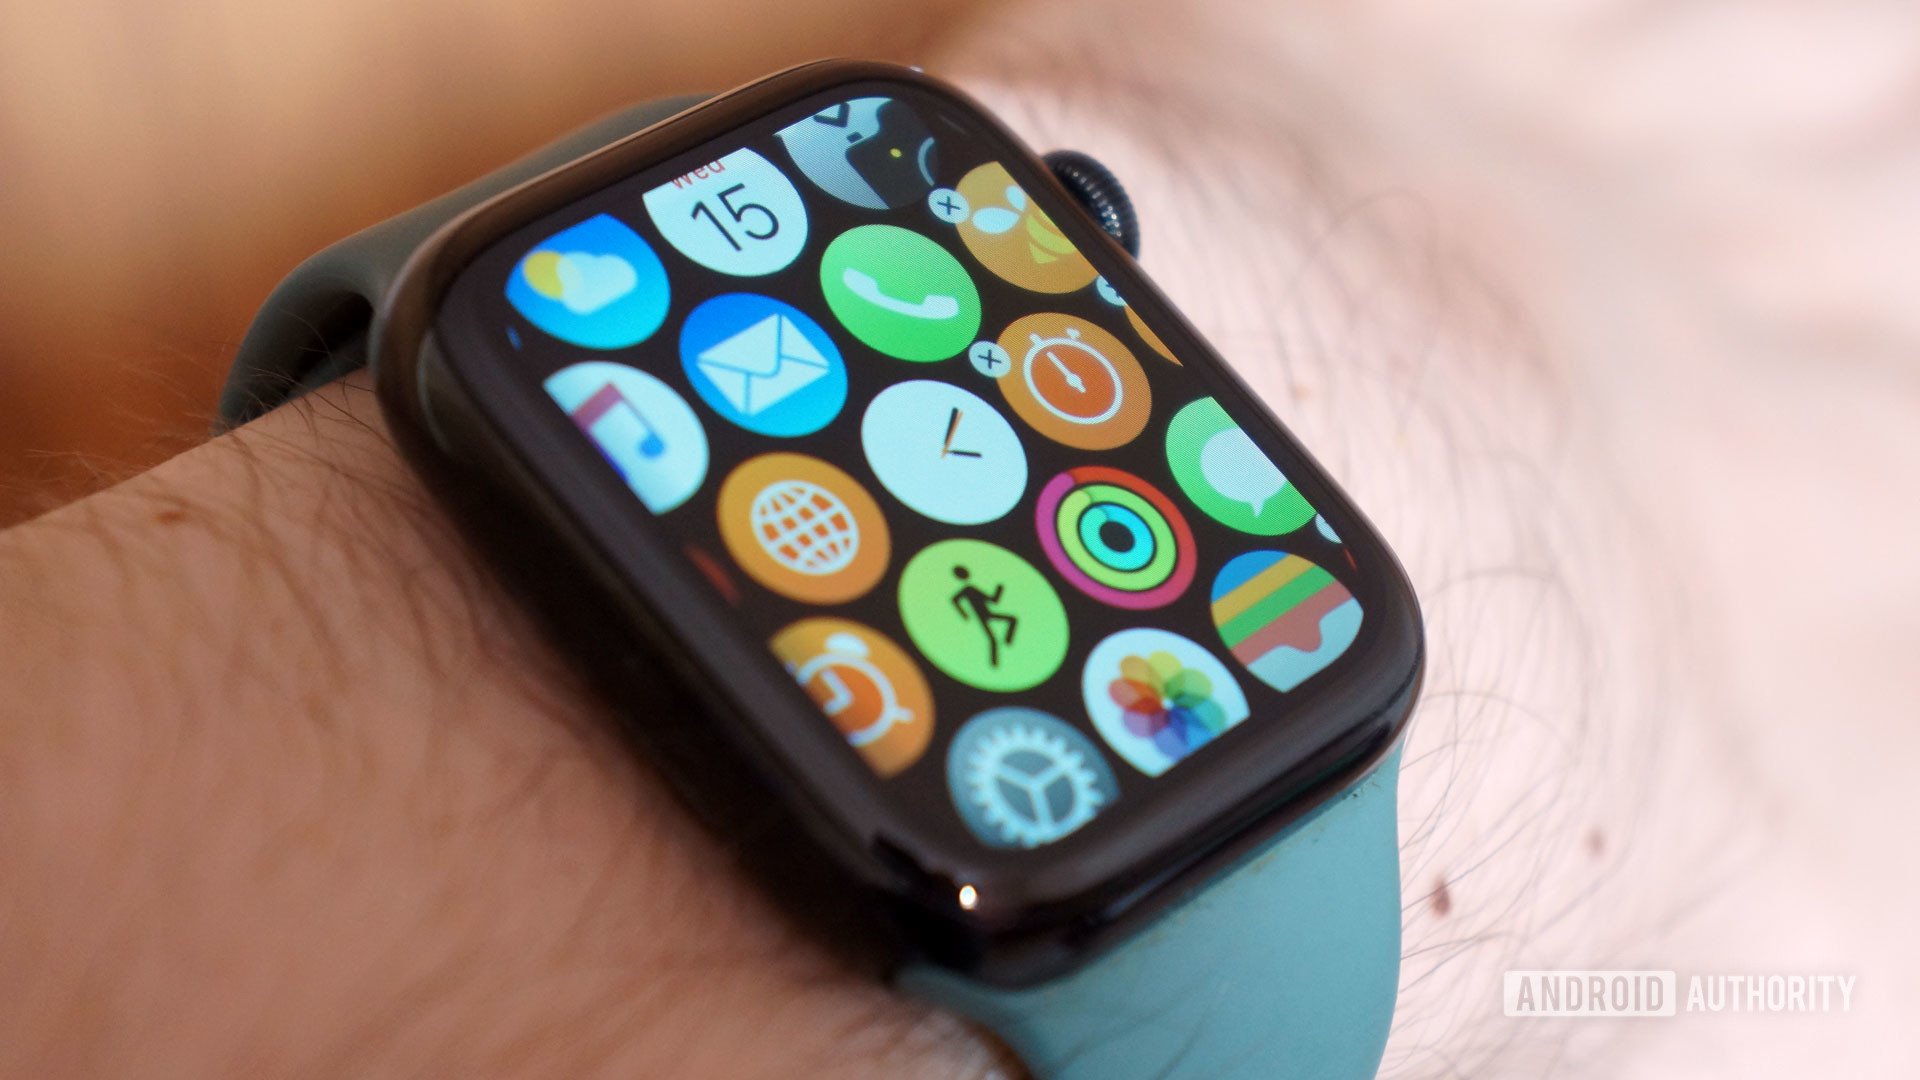 Over 100 million people use Apple Watch worldwide